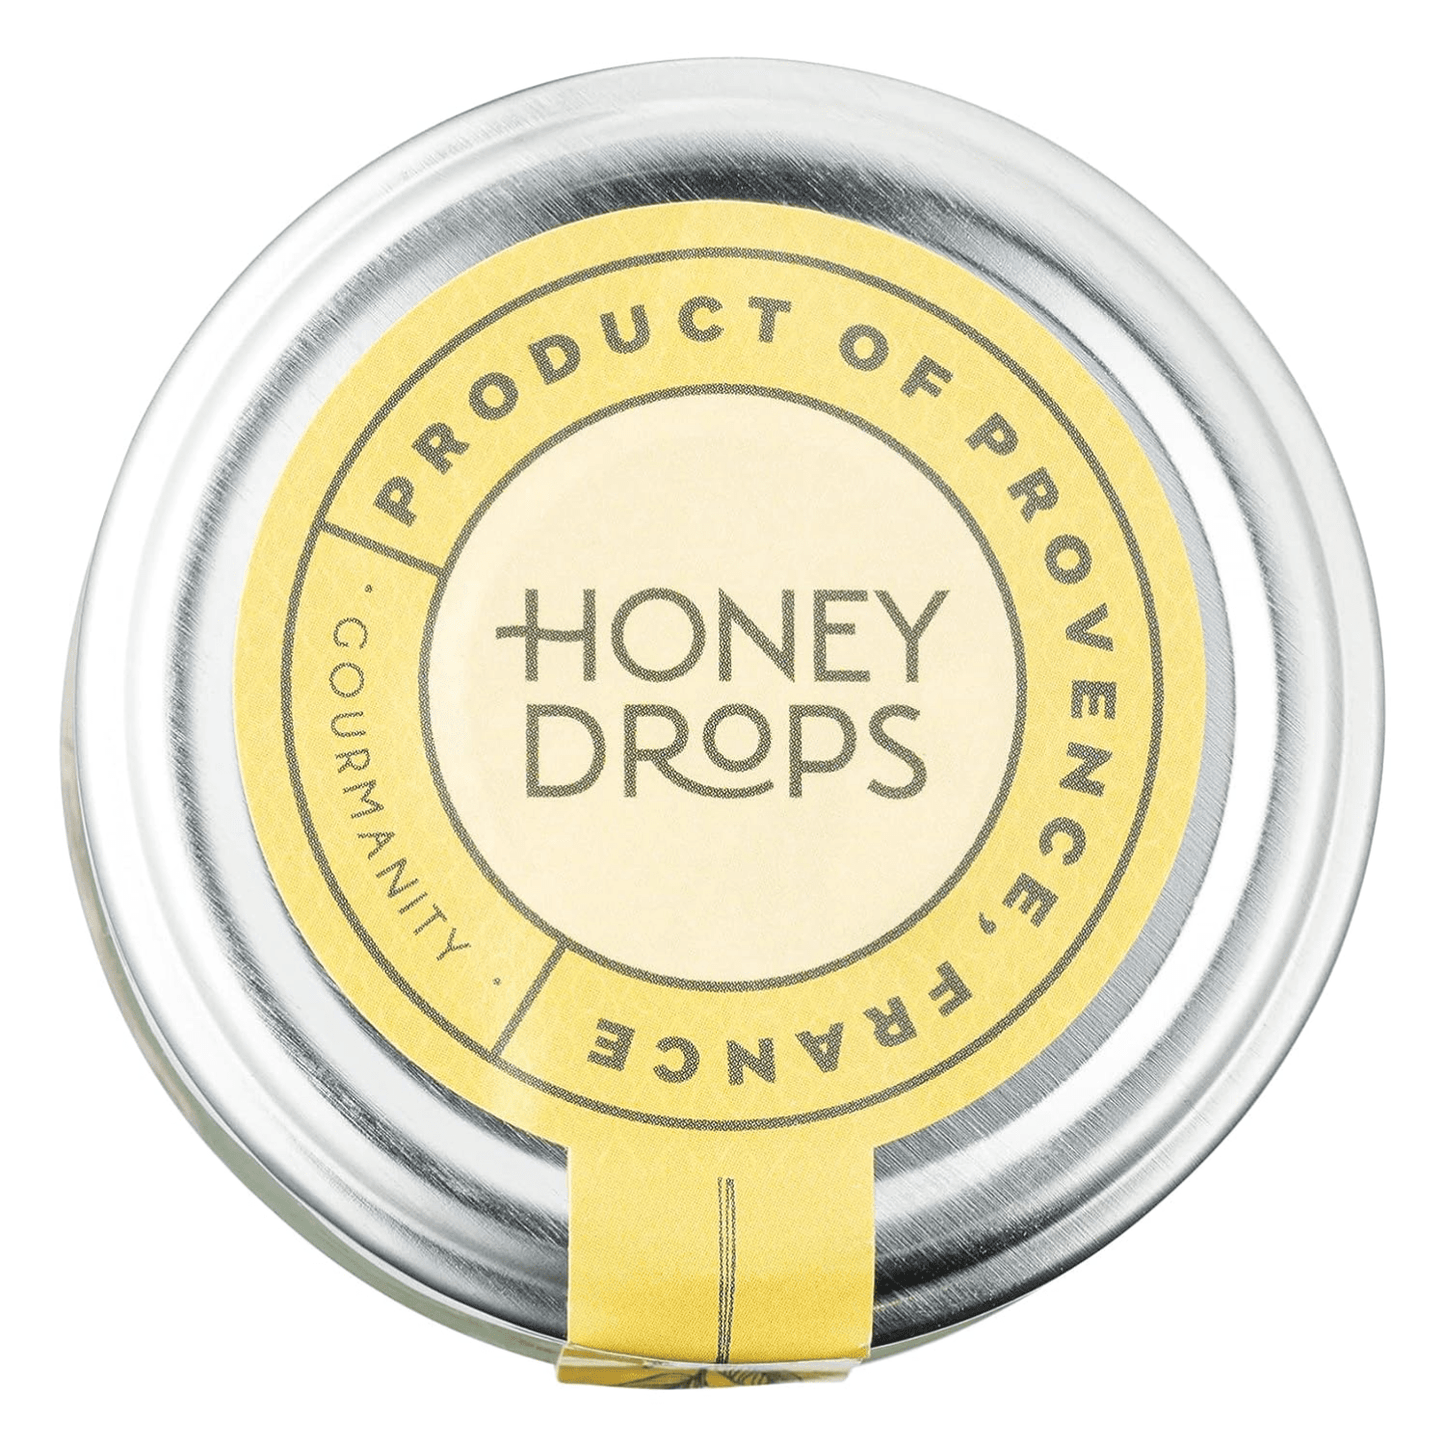 Gourmanity Honey Drops Lemon Flavor 7oz - Gourmanity